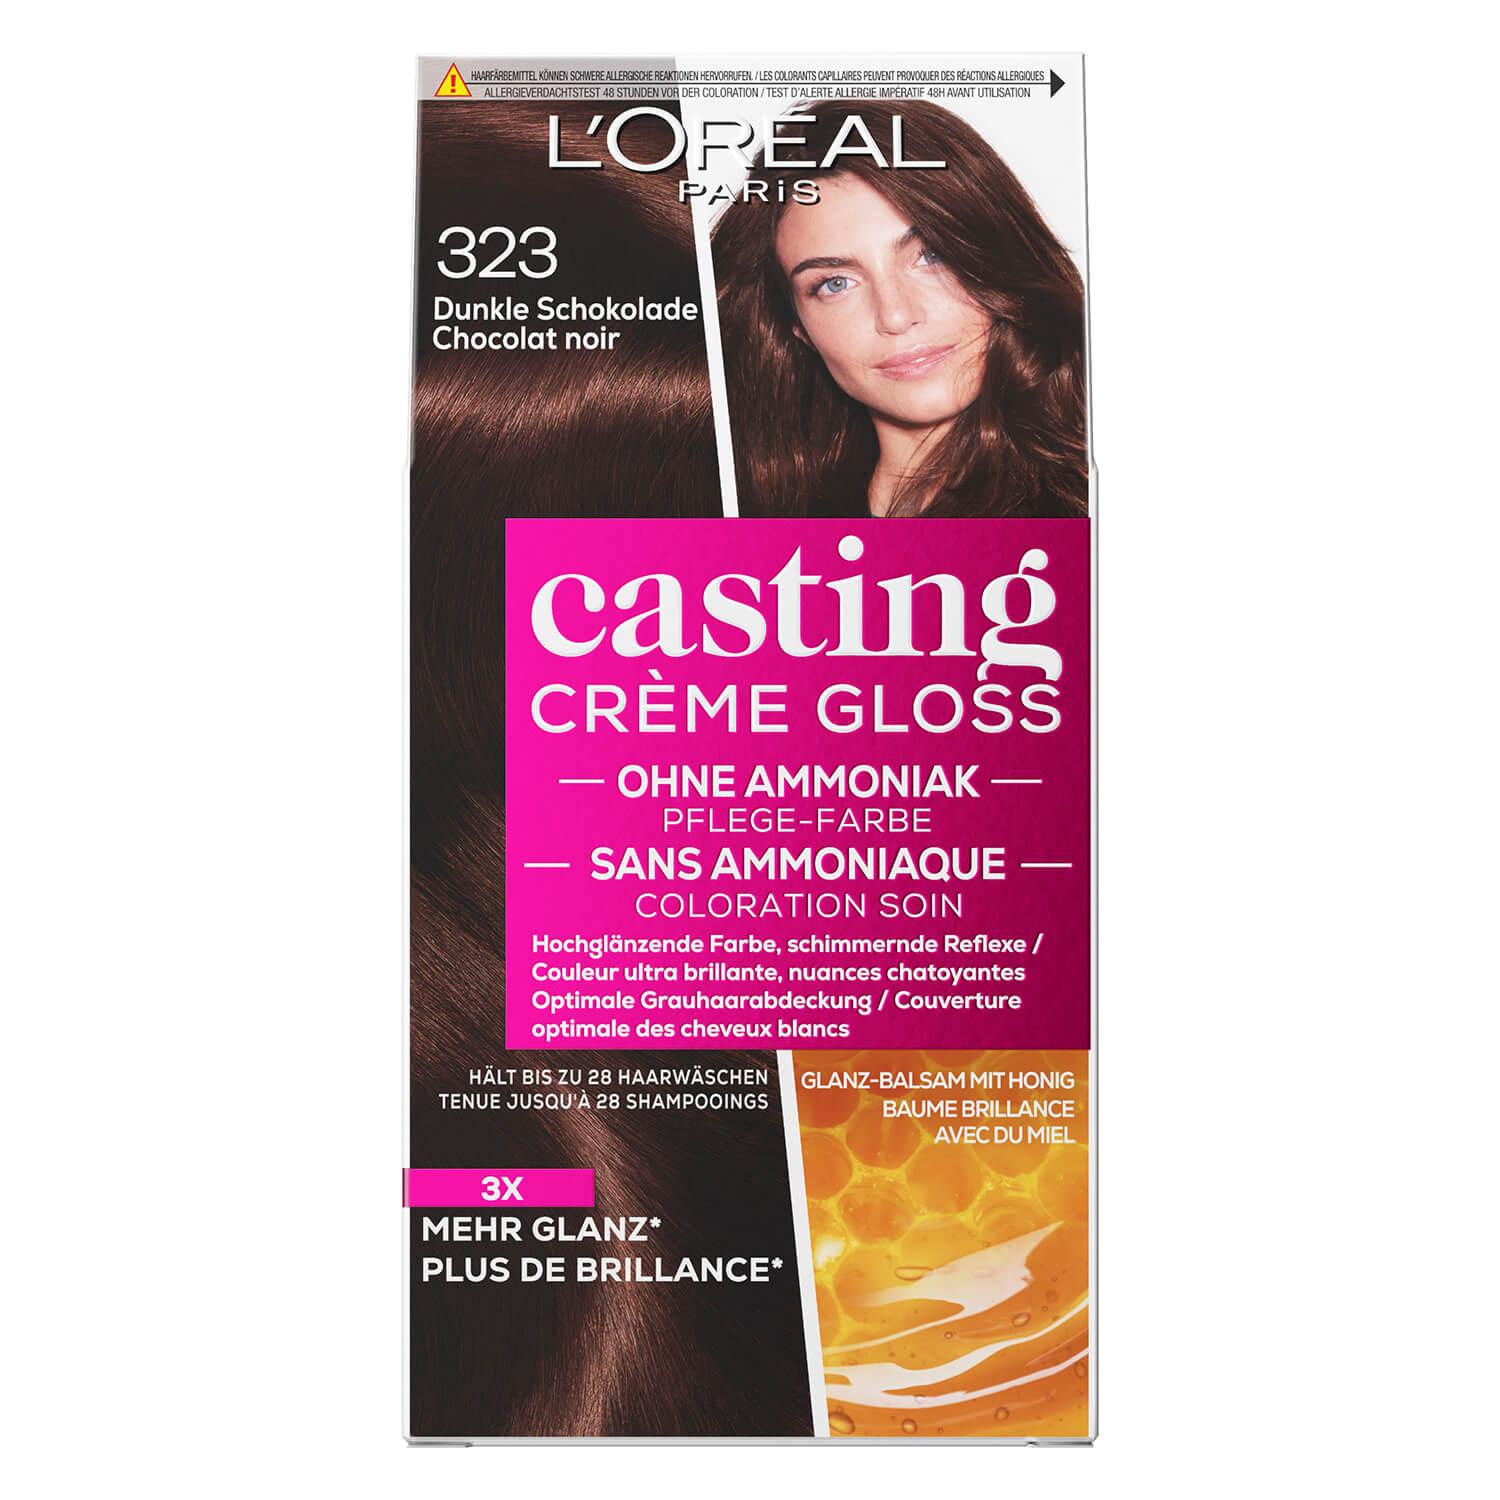 LOréal Casting - Crème Gloss 323 Dark Chocolate